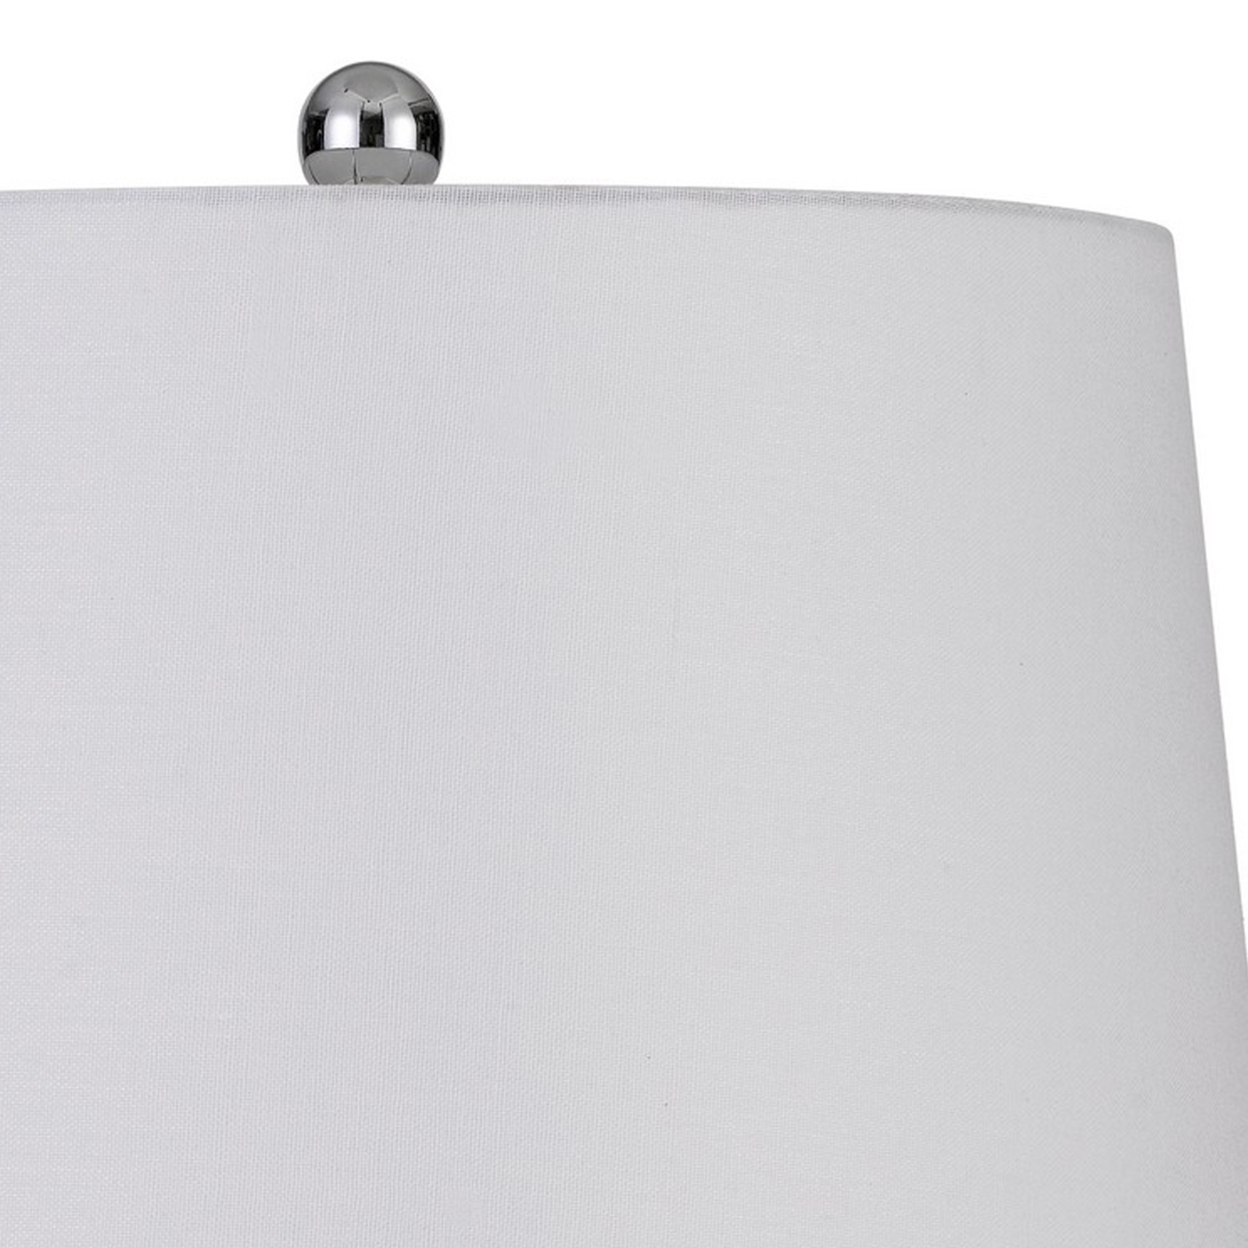 150 Watt Textured Glass Base Table Lamp, White And Clear- Saltoro Sherpi